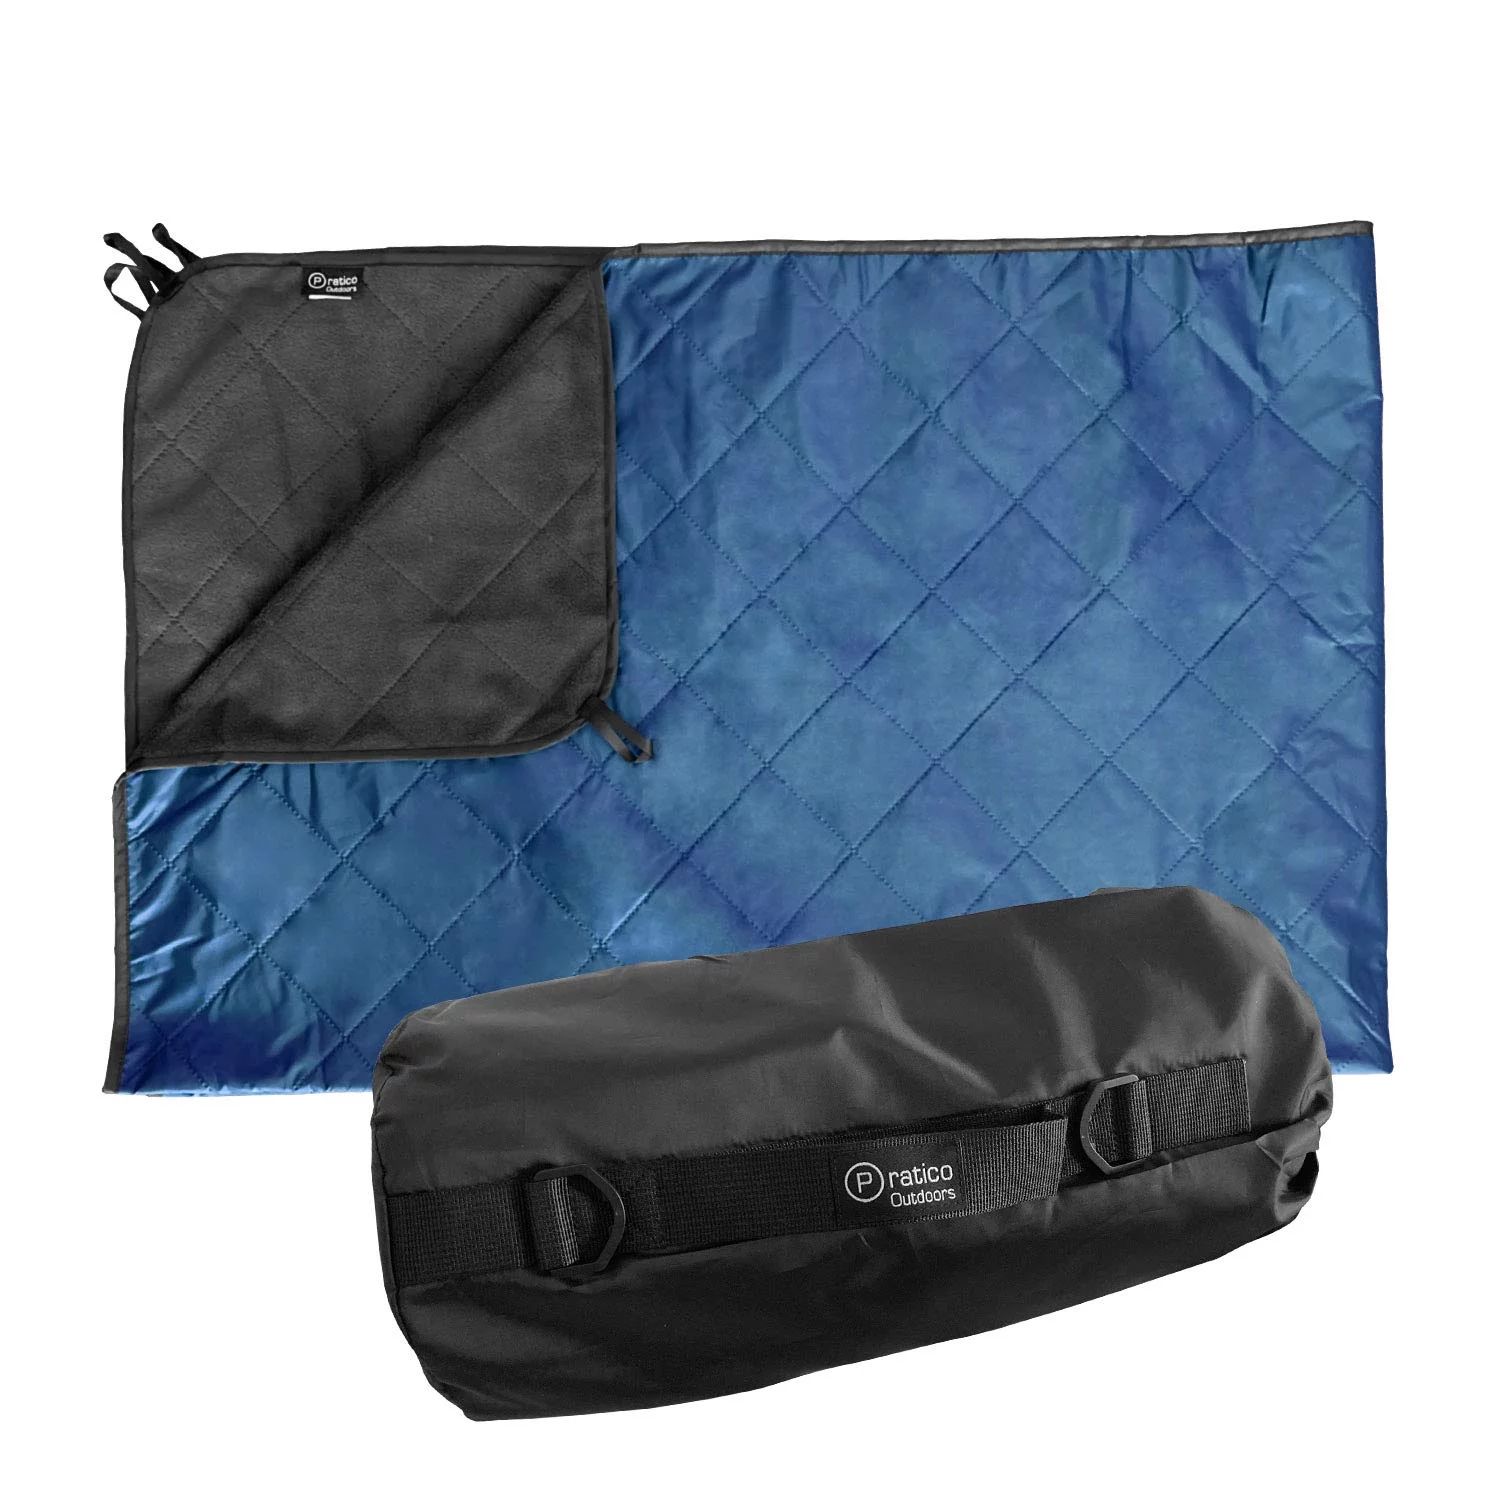 Pratico Outdoors Large Fleece Picnic Blanket, 58 x 84 inch, Grey and Navy Blue | Walmart (US)